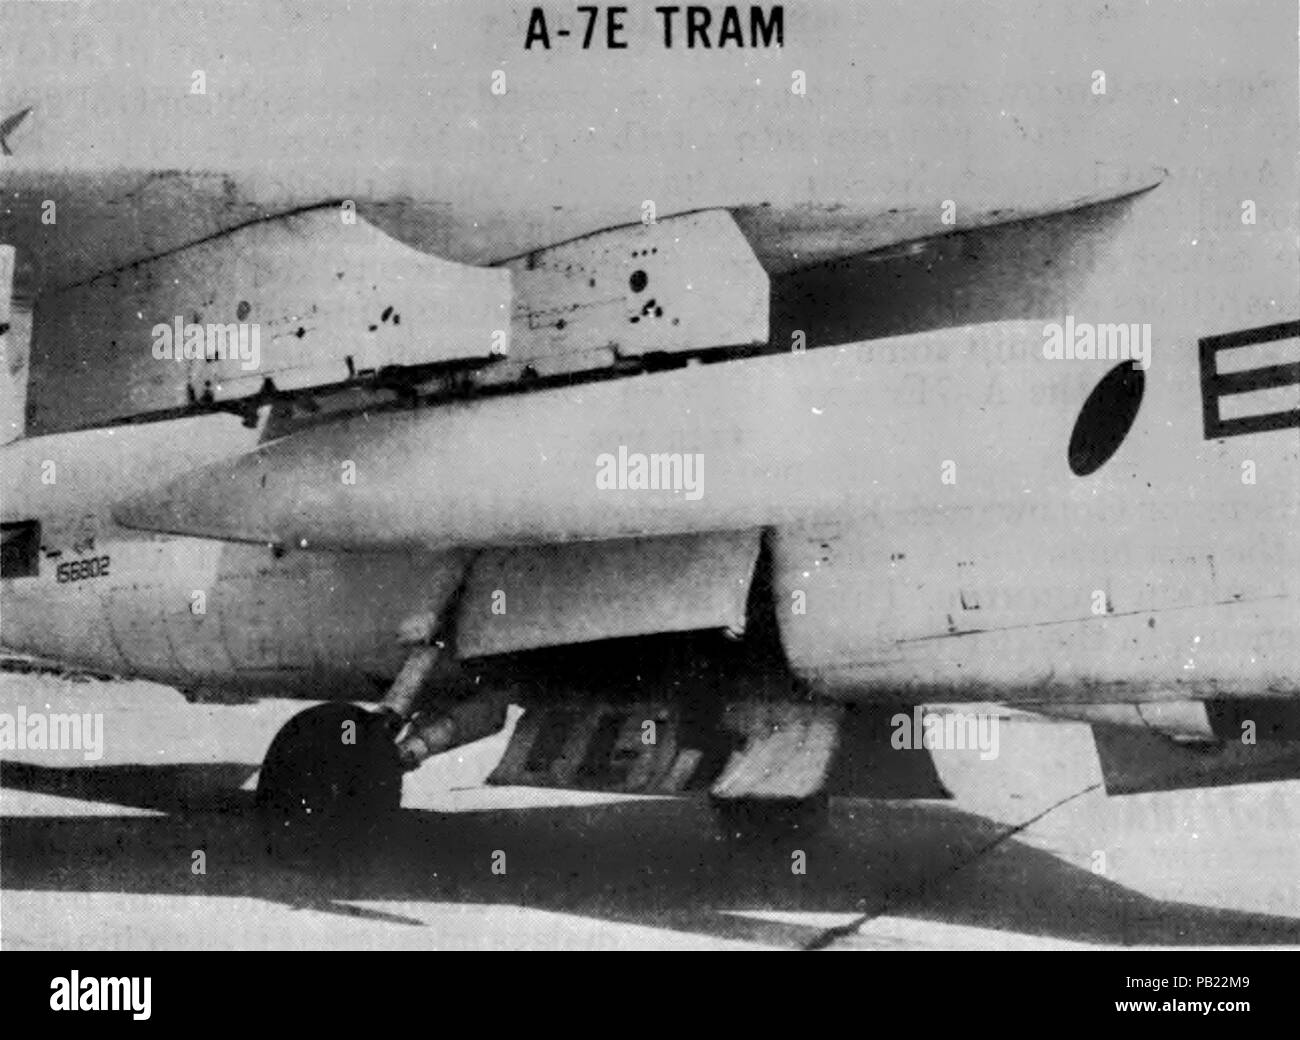 A-7E TRAM under wing pylon. Stock Photo